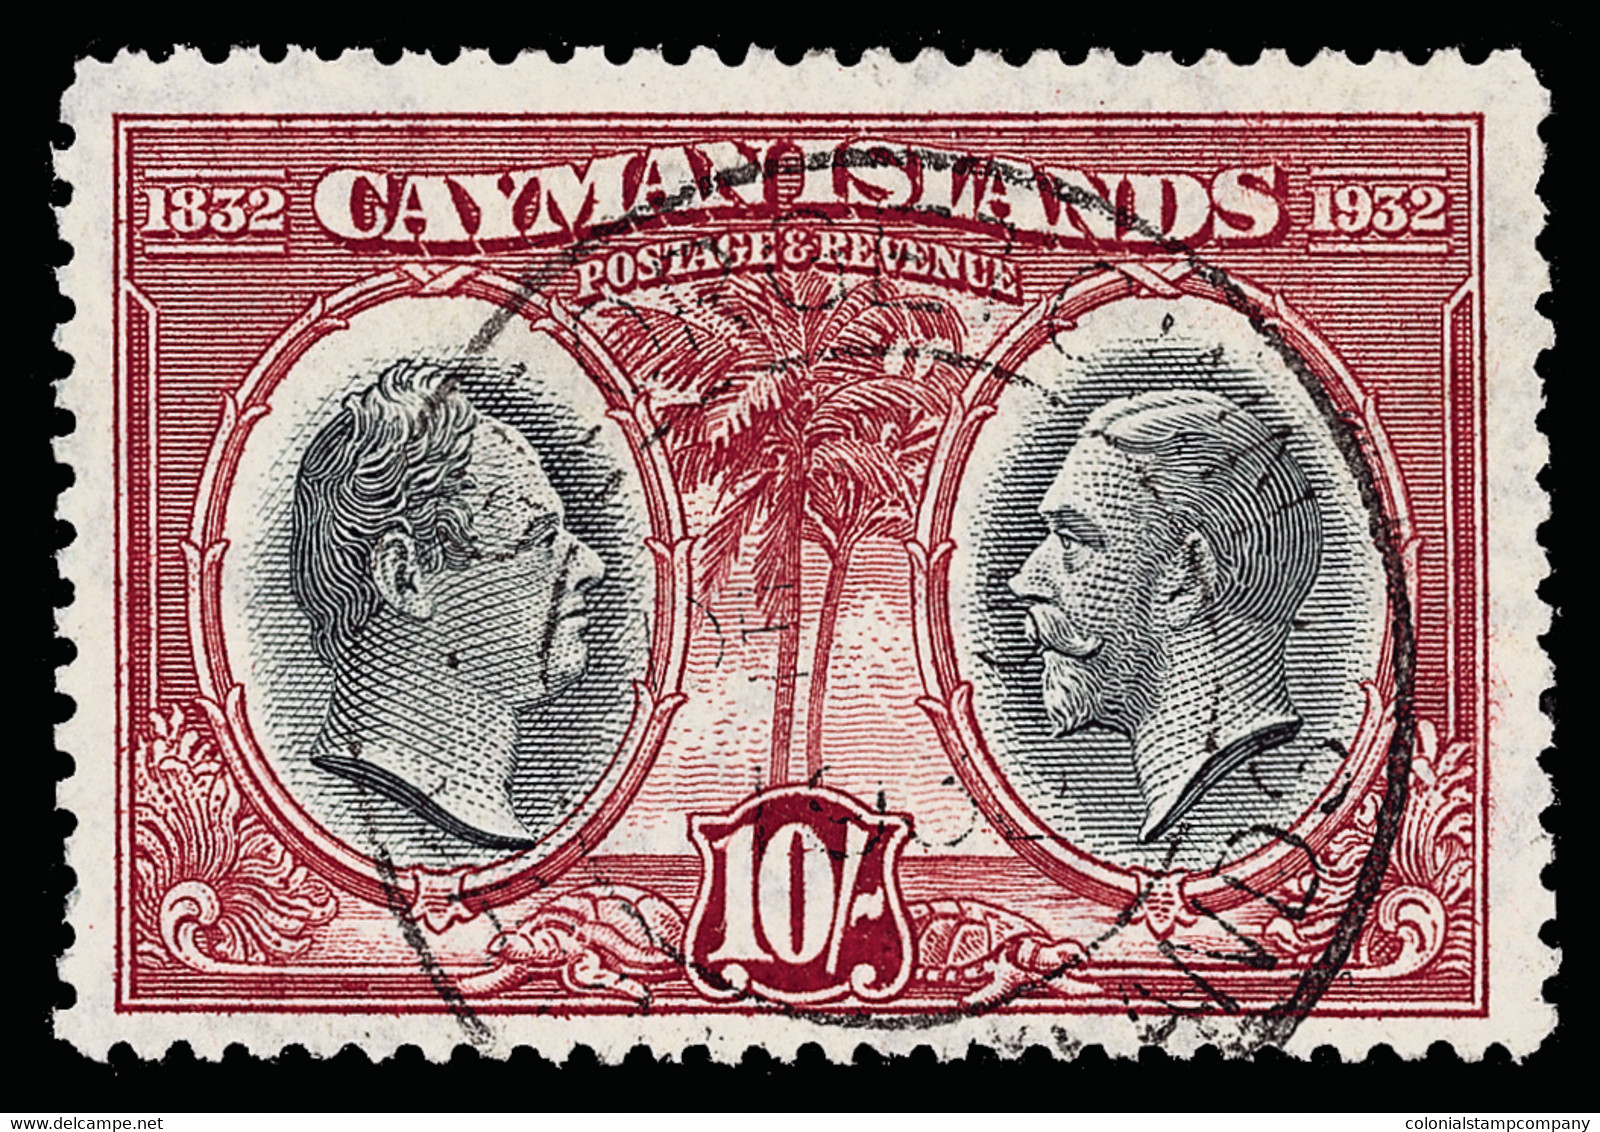 O Cayman Islands - Lot No. 520 - Cayman Islands